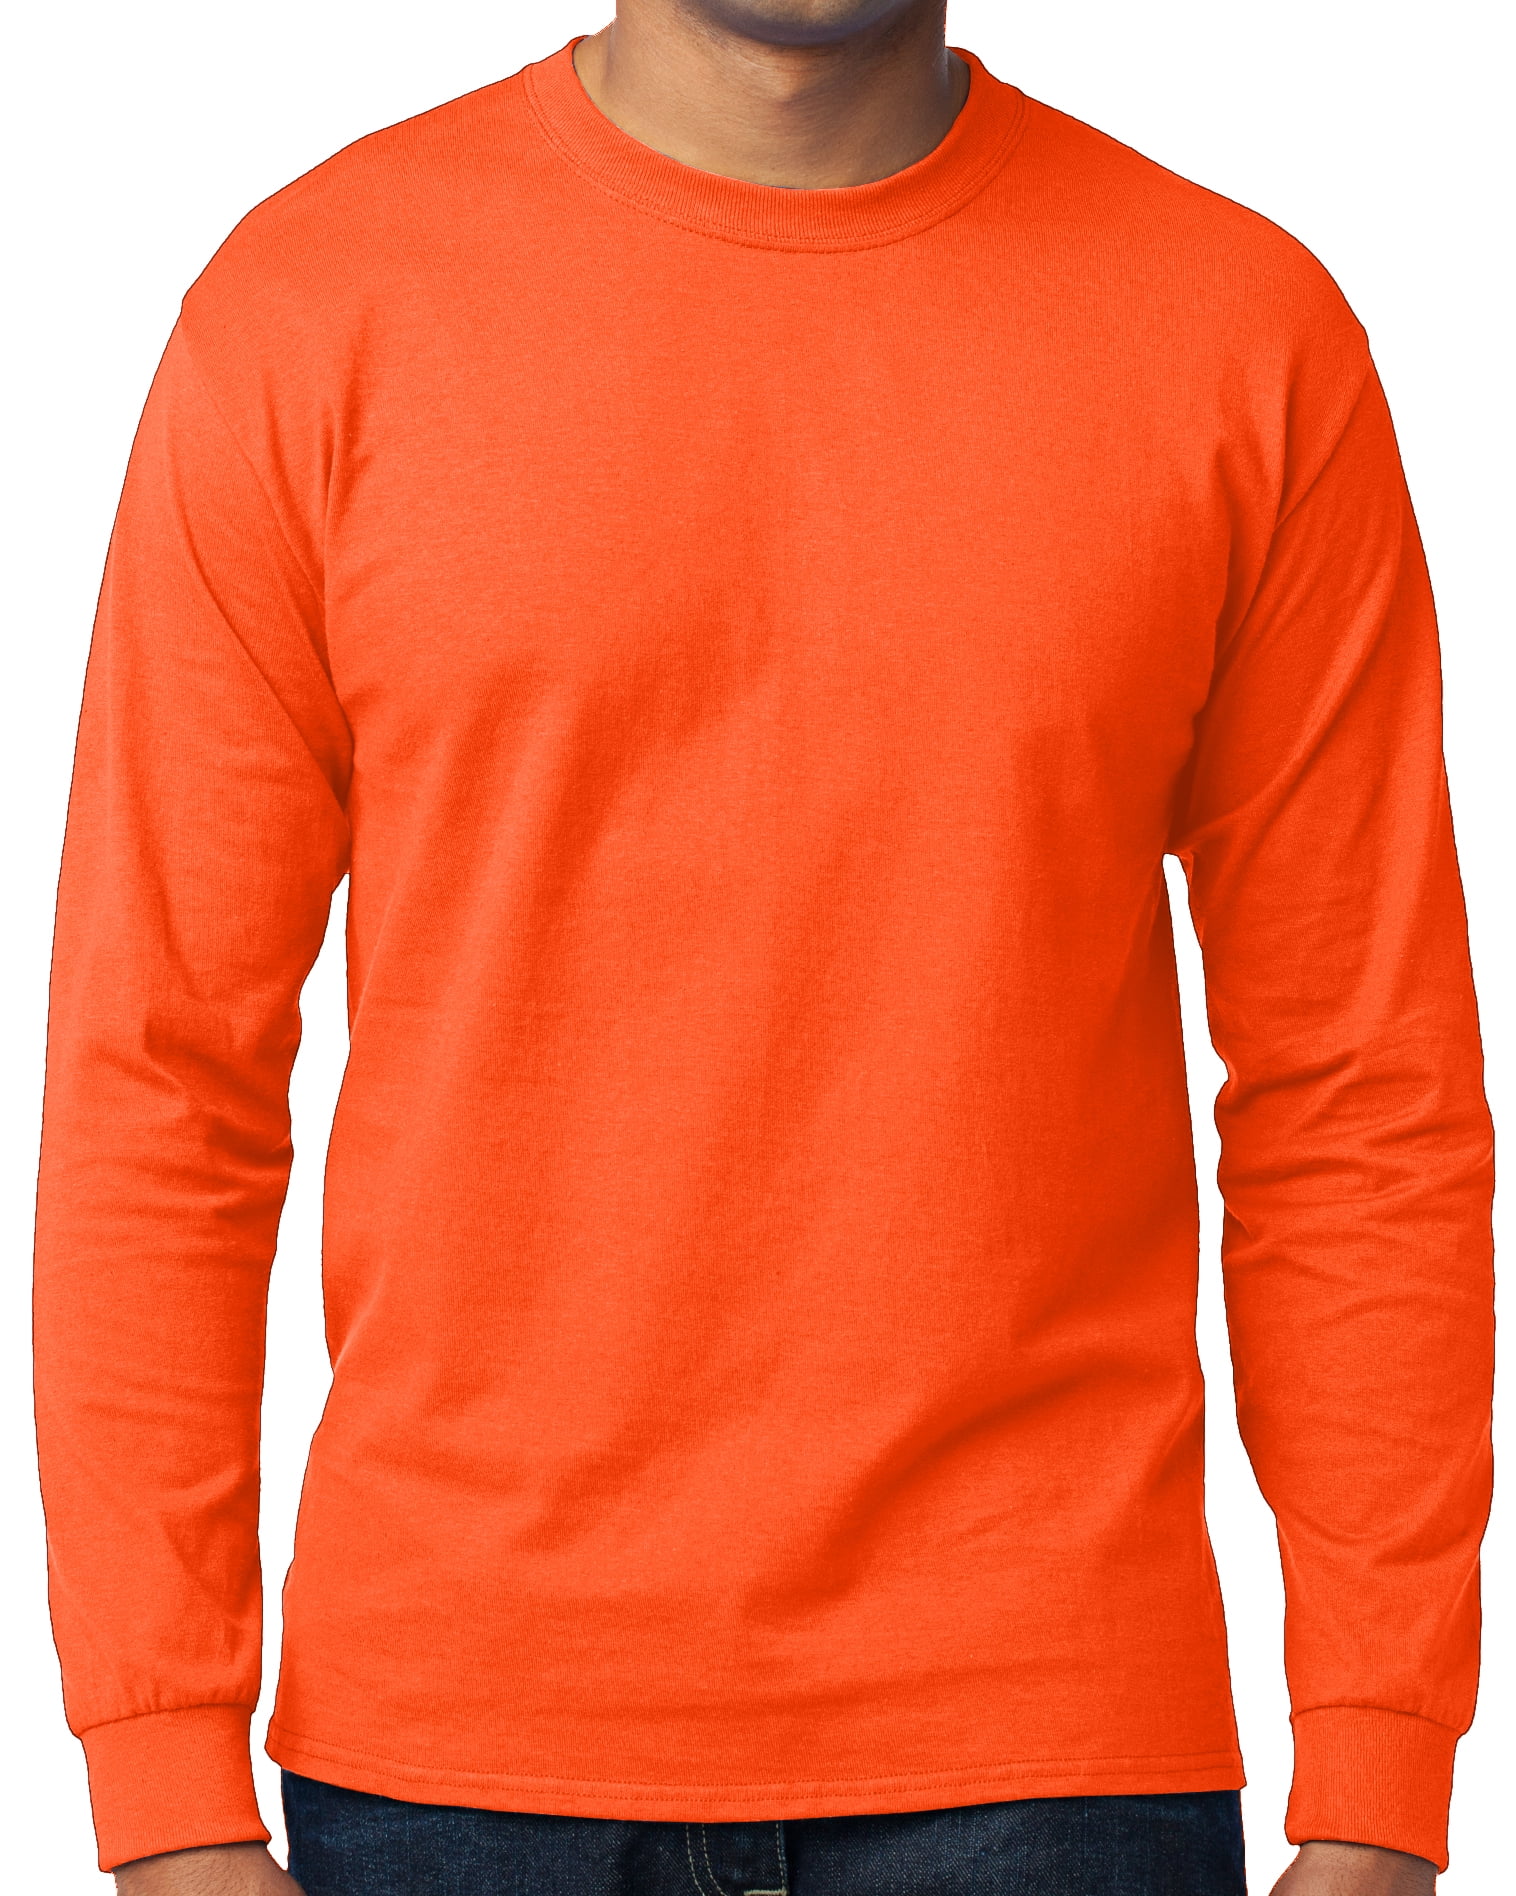 Buy > orange long sleeve top > in stock